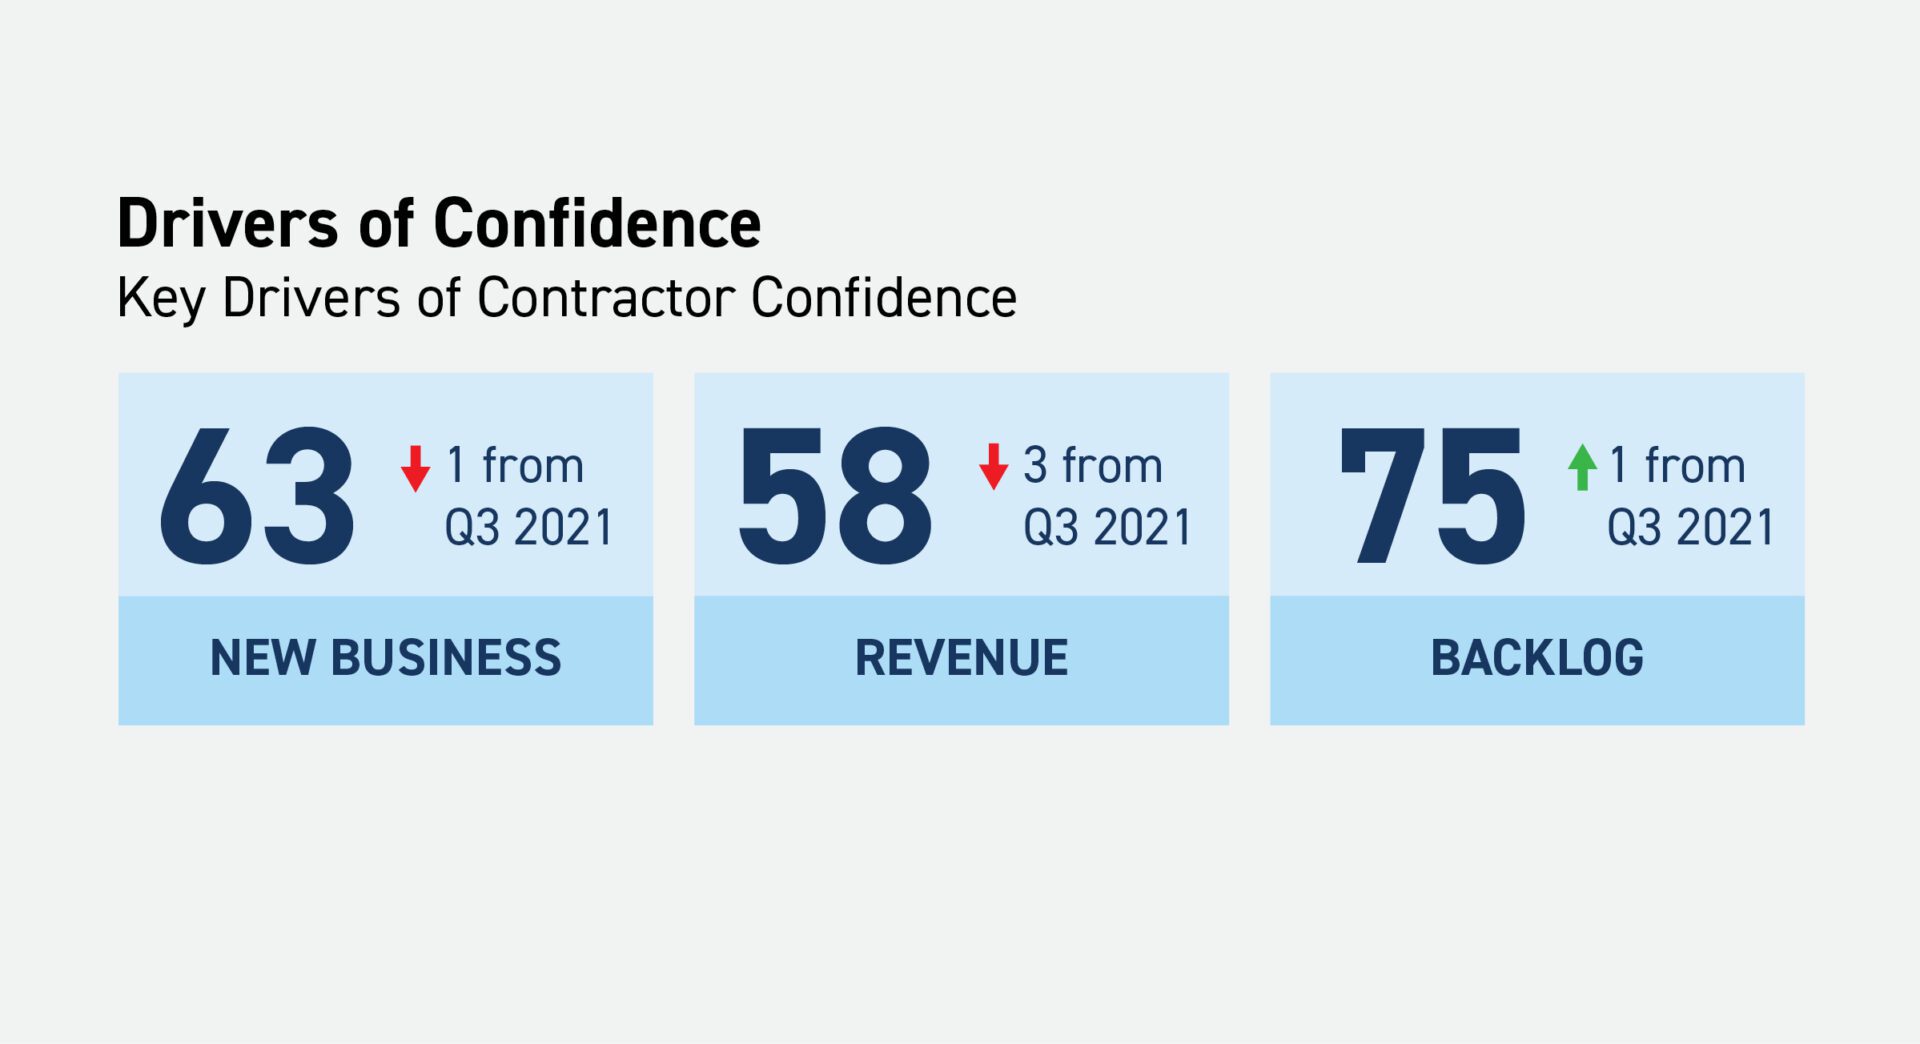 Construction Confidence